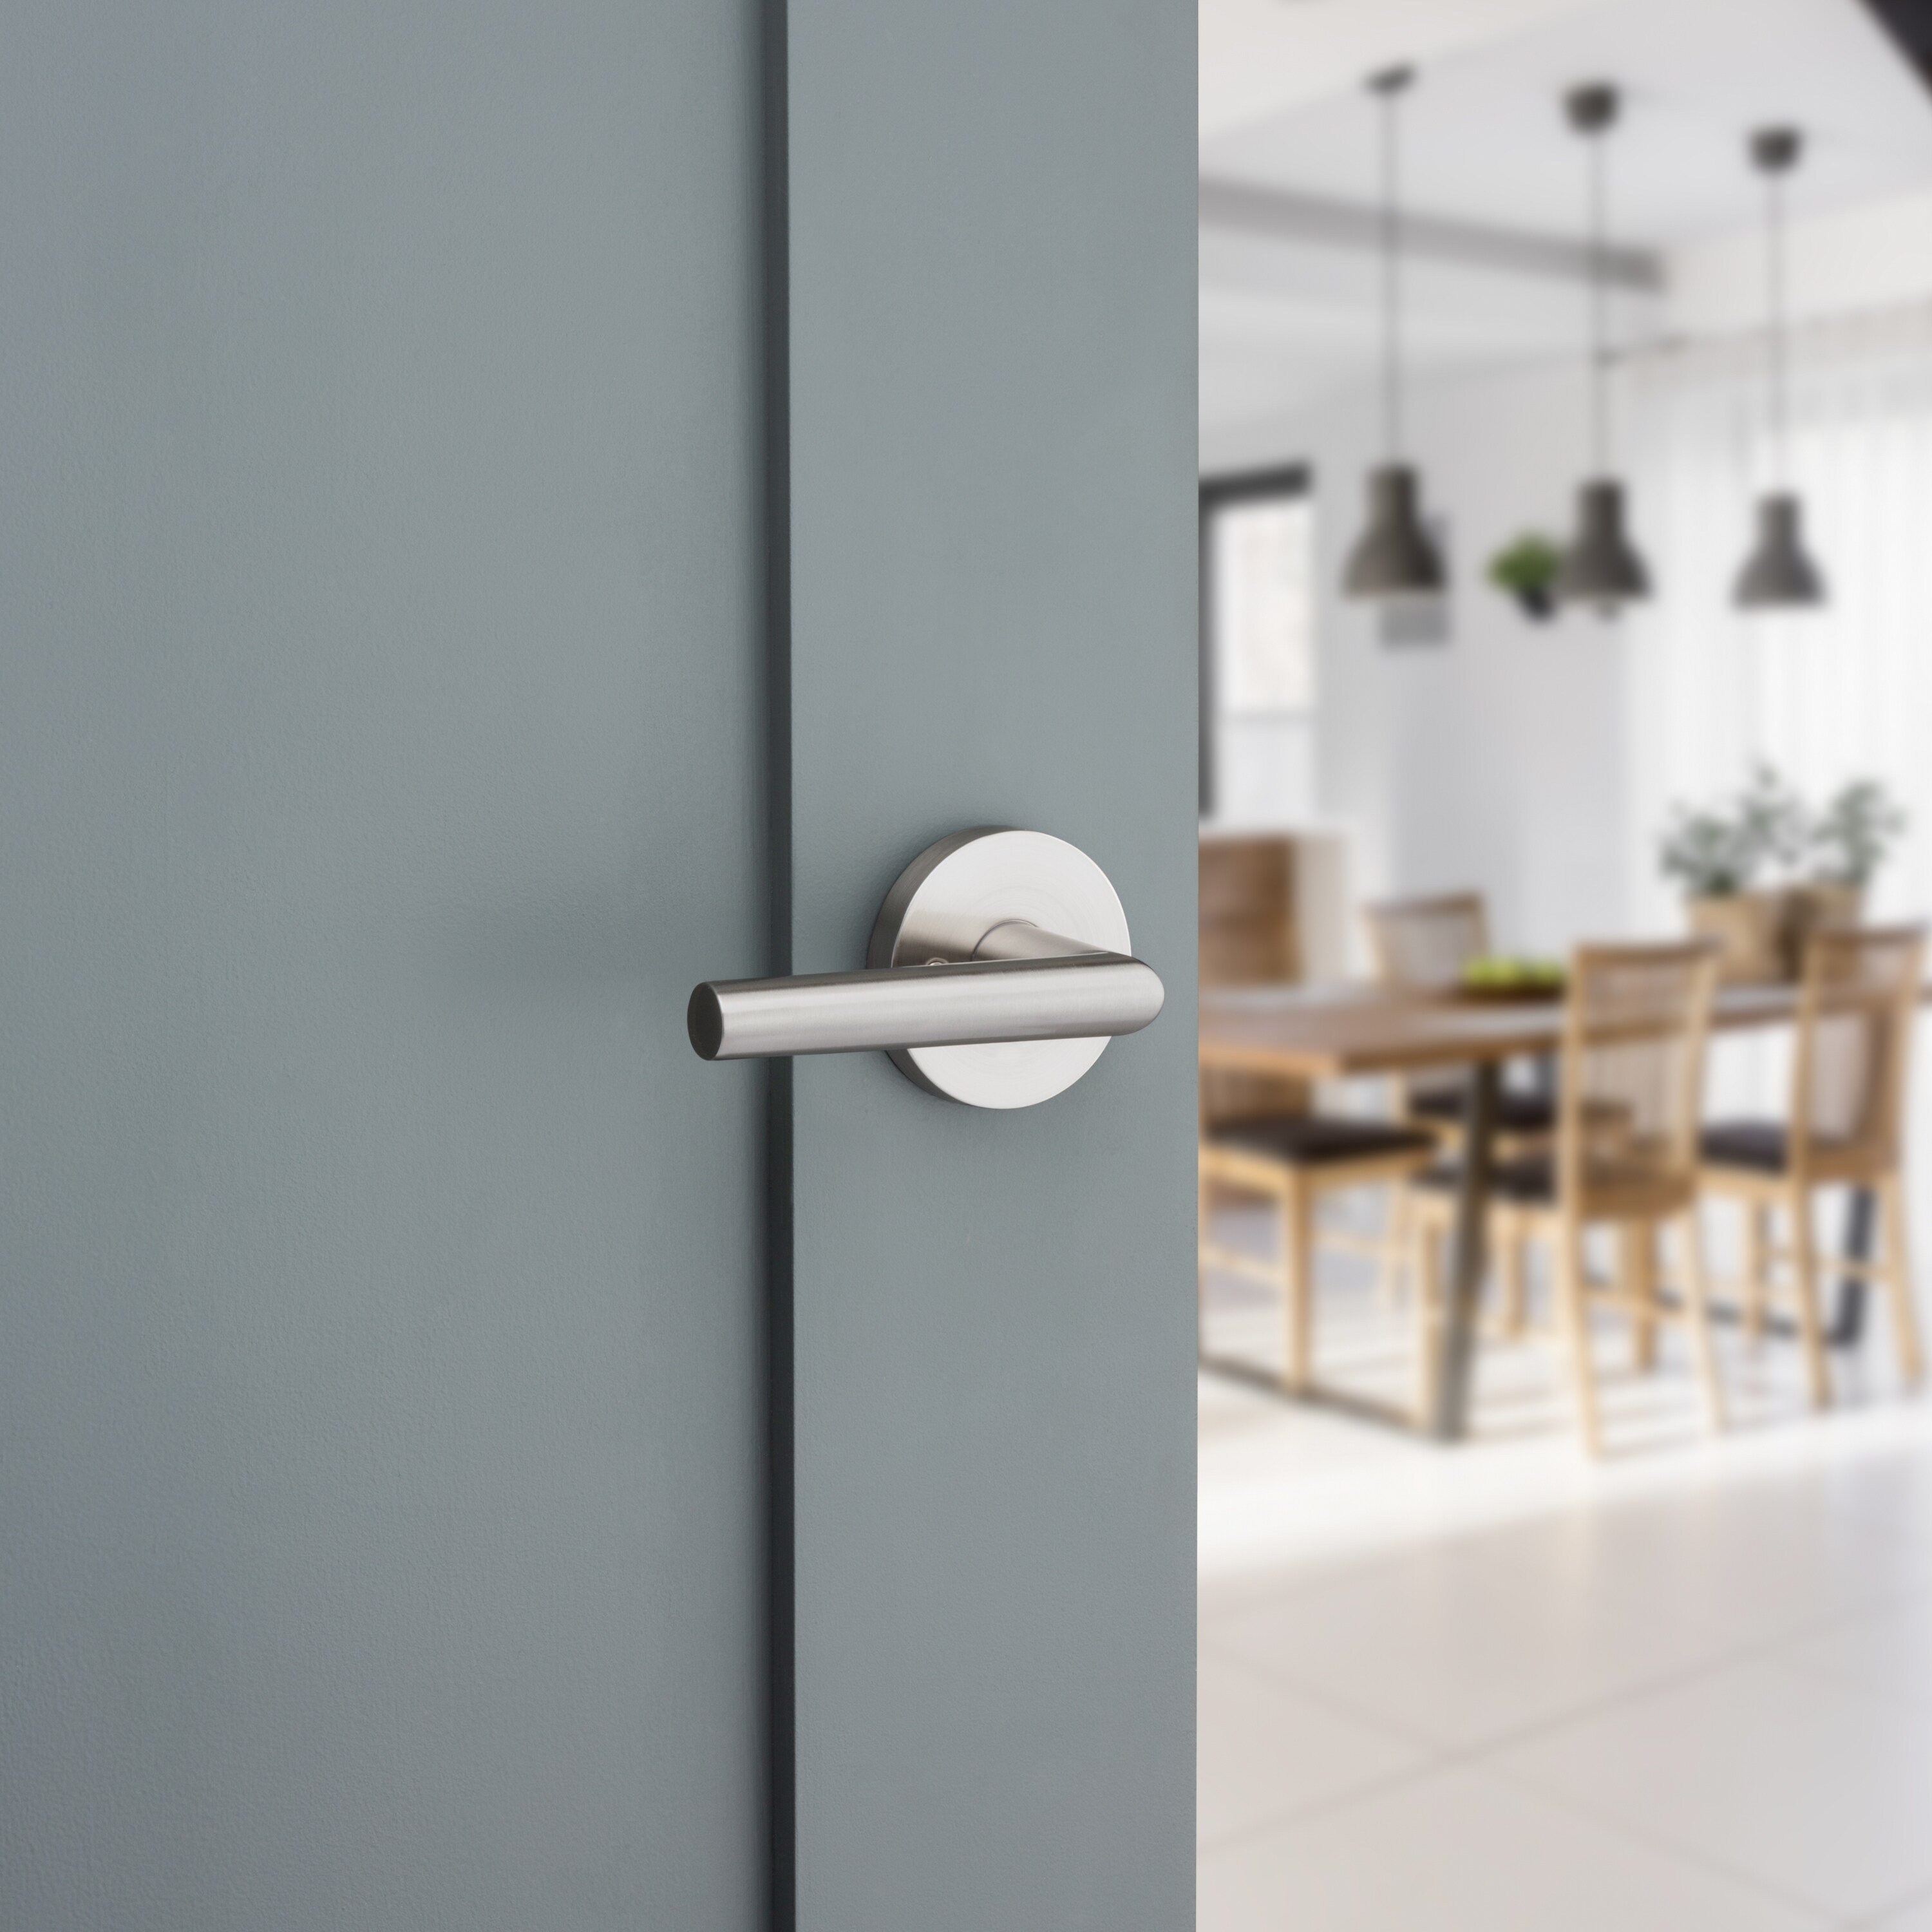 Kwikset Satin Nickel 91550-003 Milan Door Handle Lever with Modern Contemporary Slim Round Design for Home Bedroom or Bathroom Privacy Pack of 2